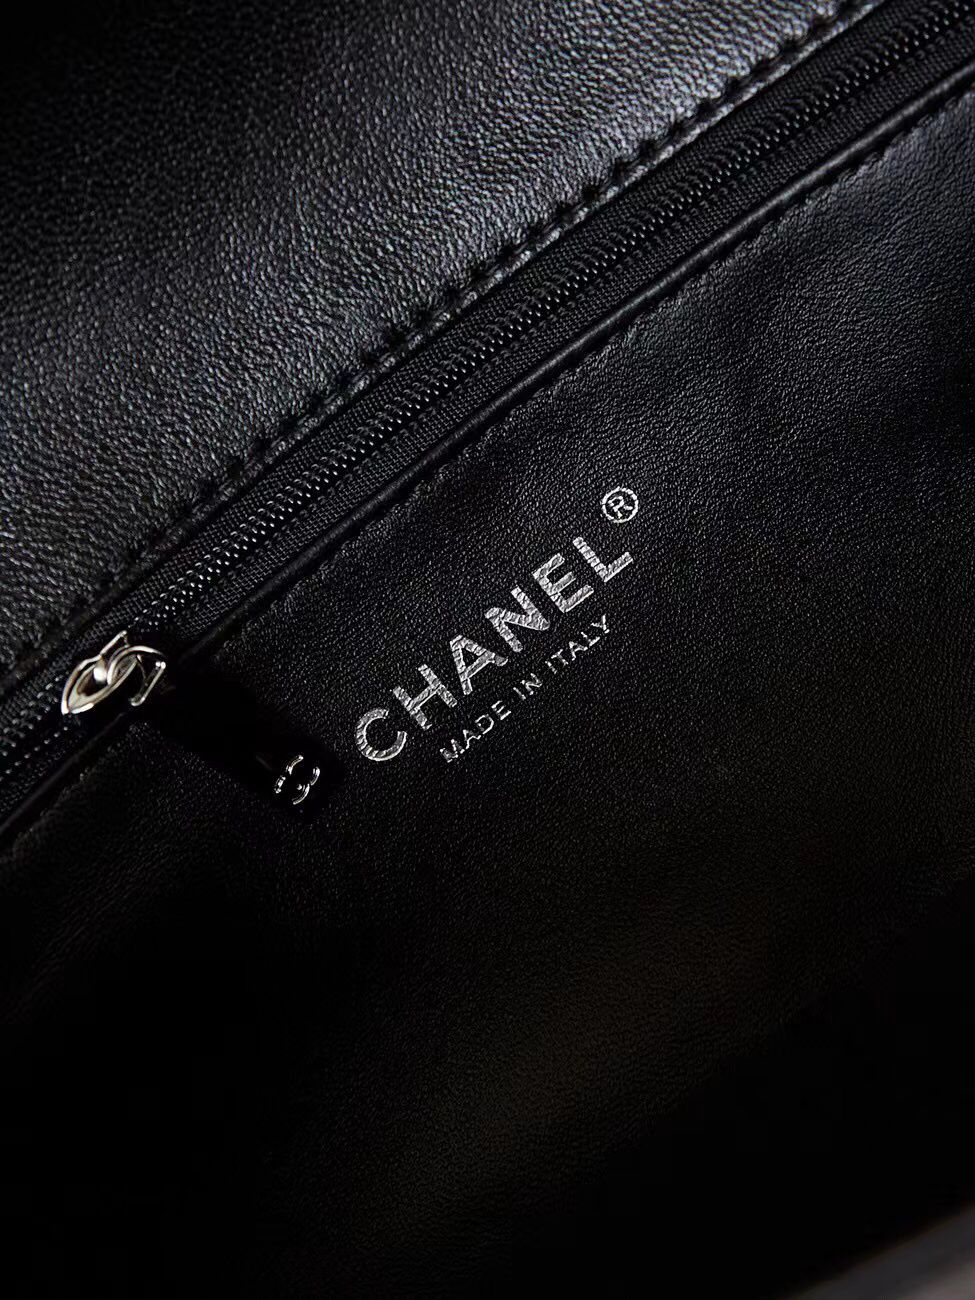 Chanel Original Leather Pearl CC LOGO Bag AS4221 Black